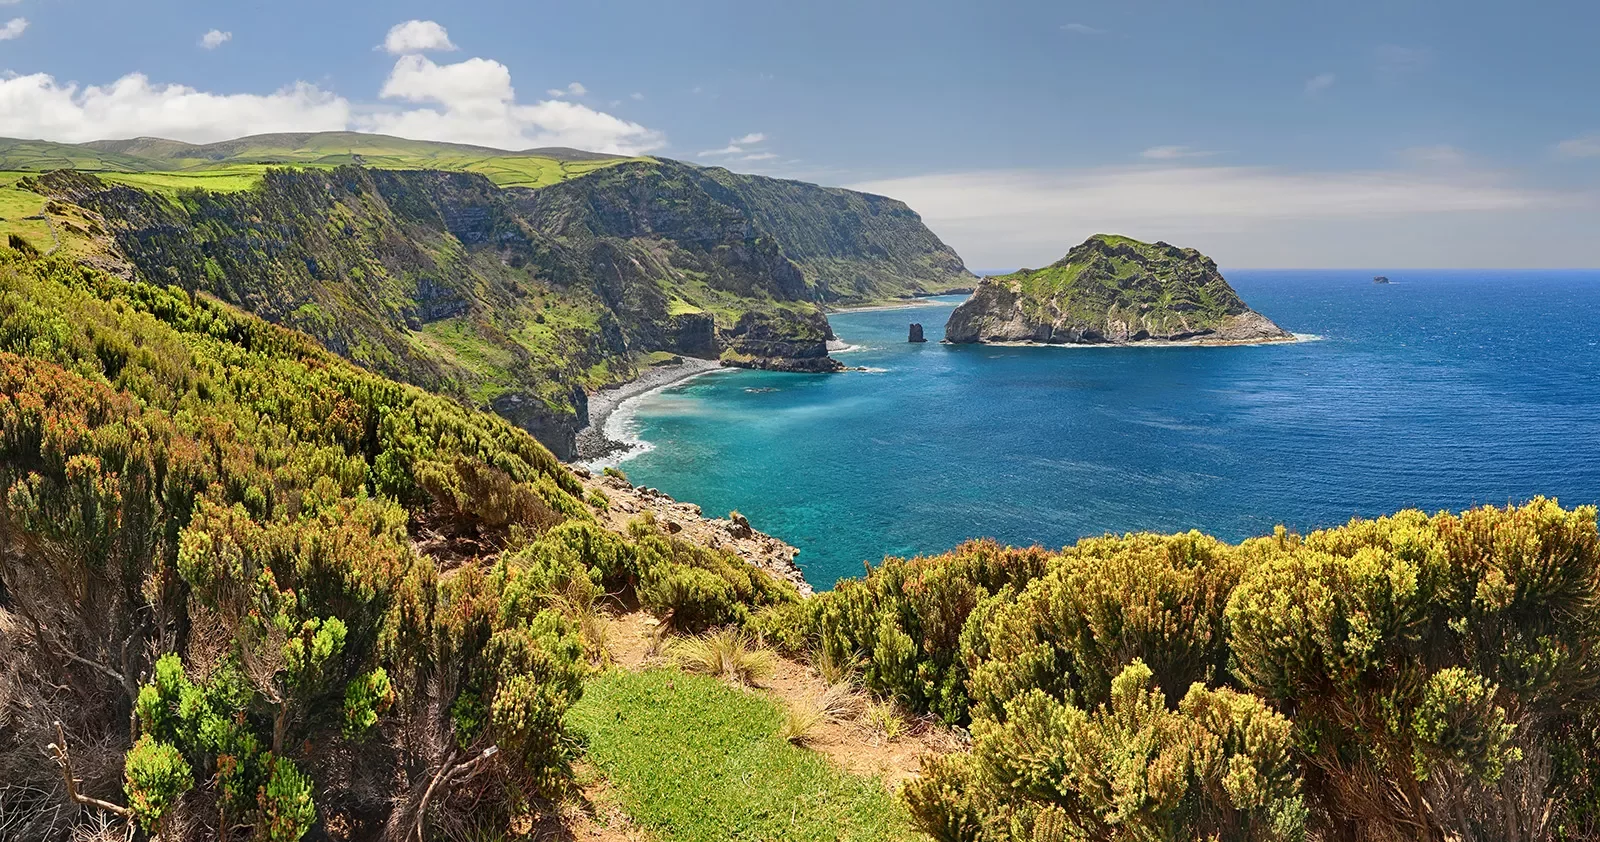 Northern Coast at Flores near Ponta Delgada (Azores islands).